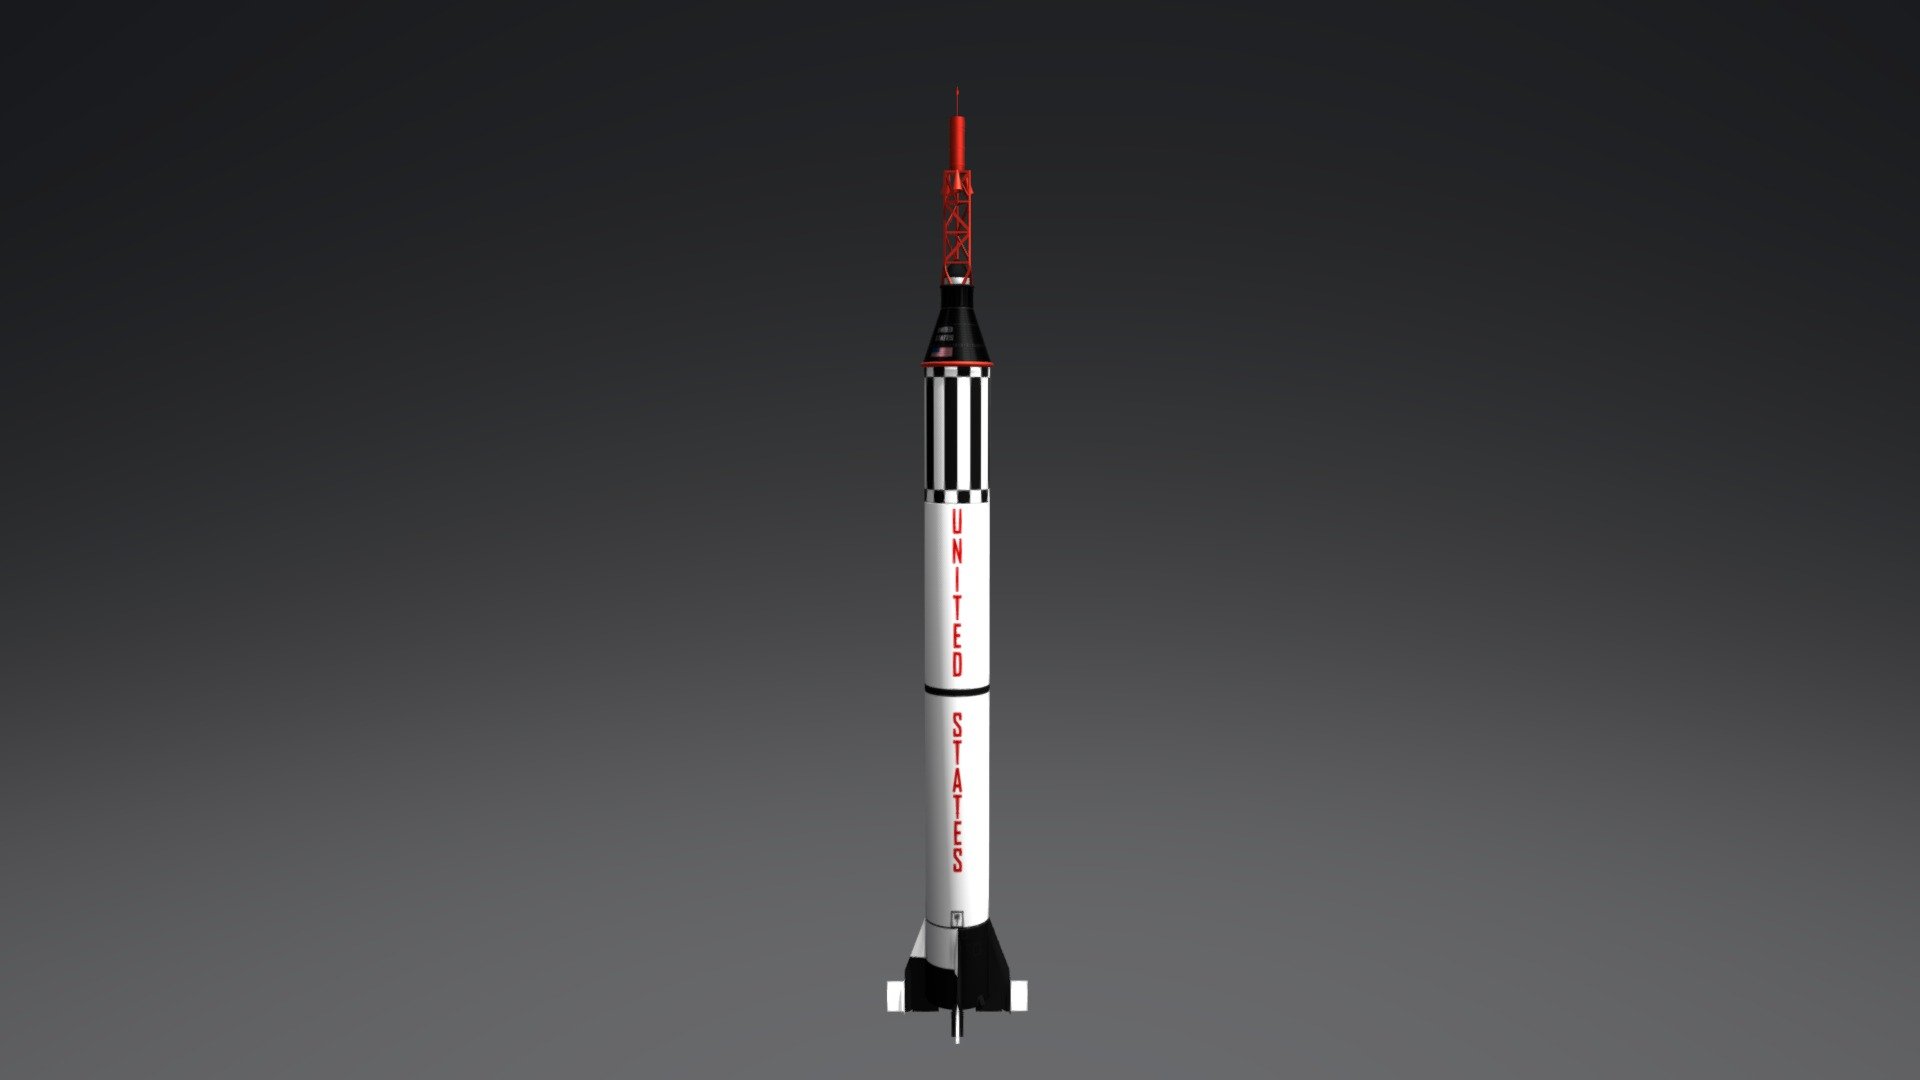 Mercury- Redstone Launch Vehicle